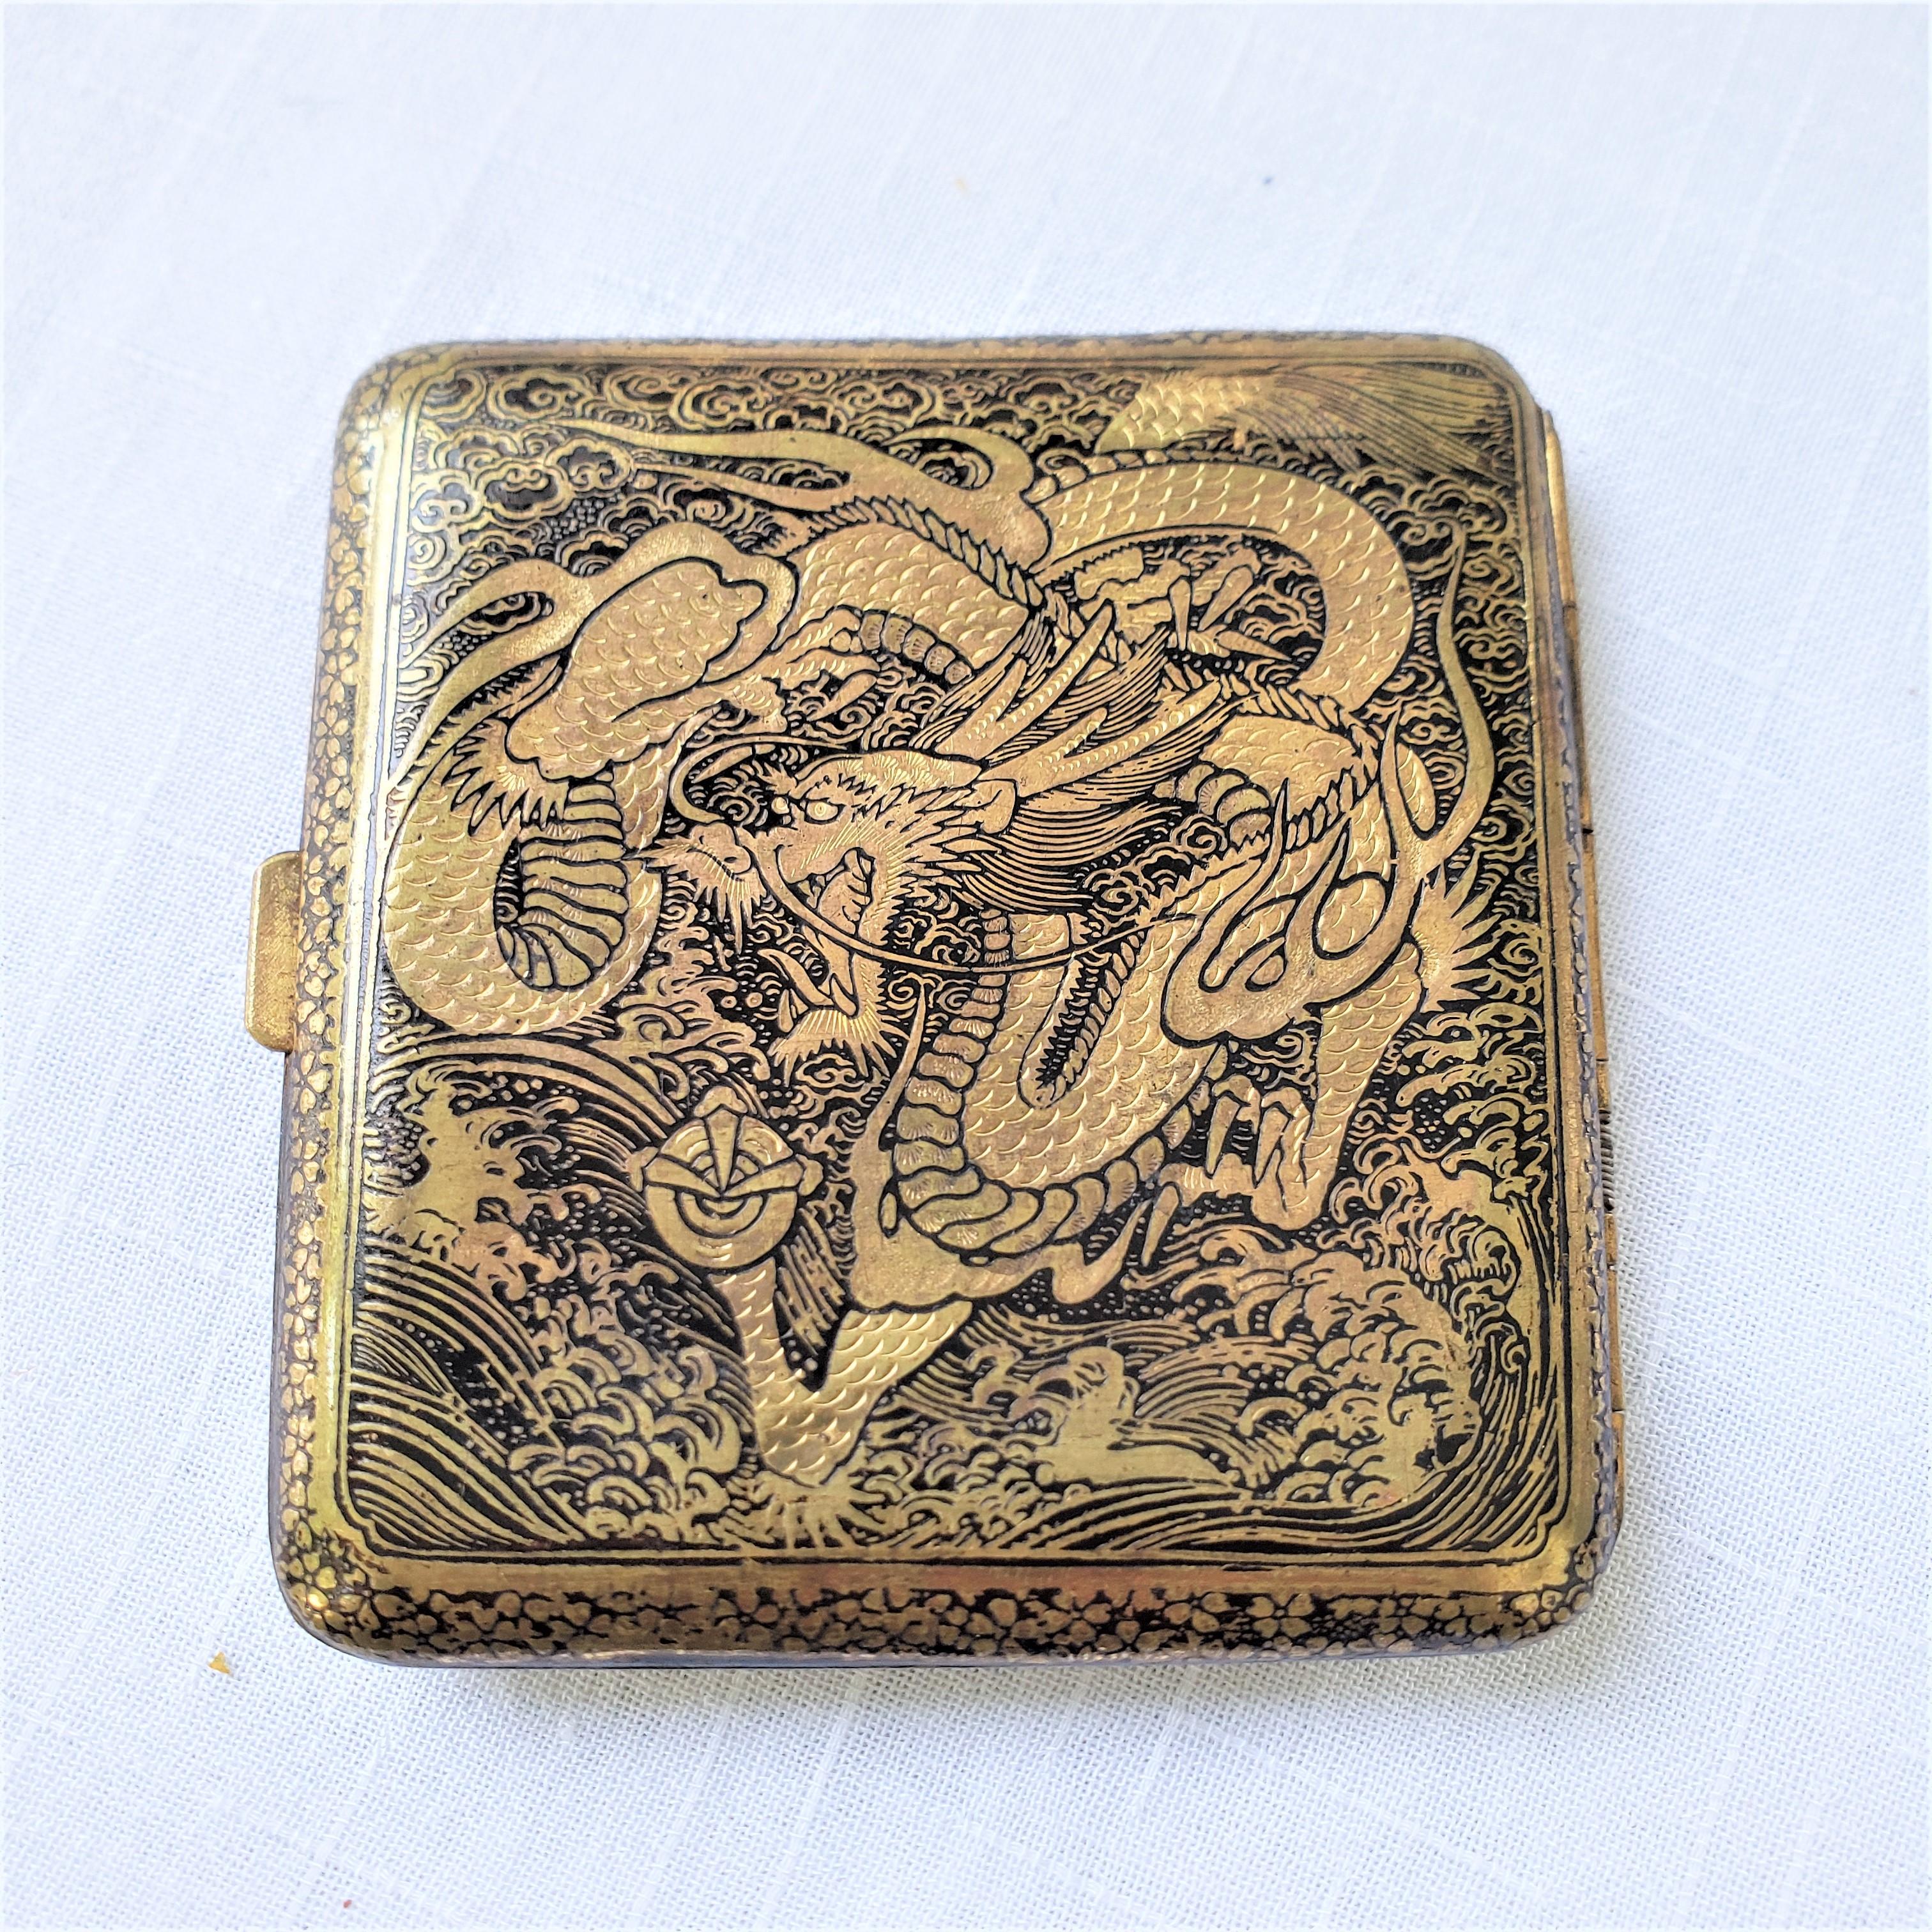 Antique Japanese Damascene Cigarette Case with Ornate Mt. Fuji & Dragon Decor For Sale 5